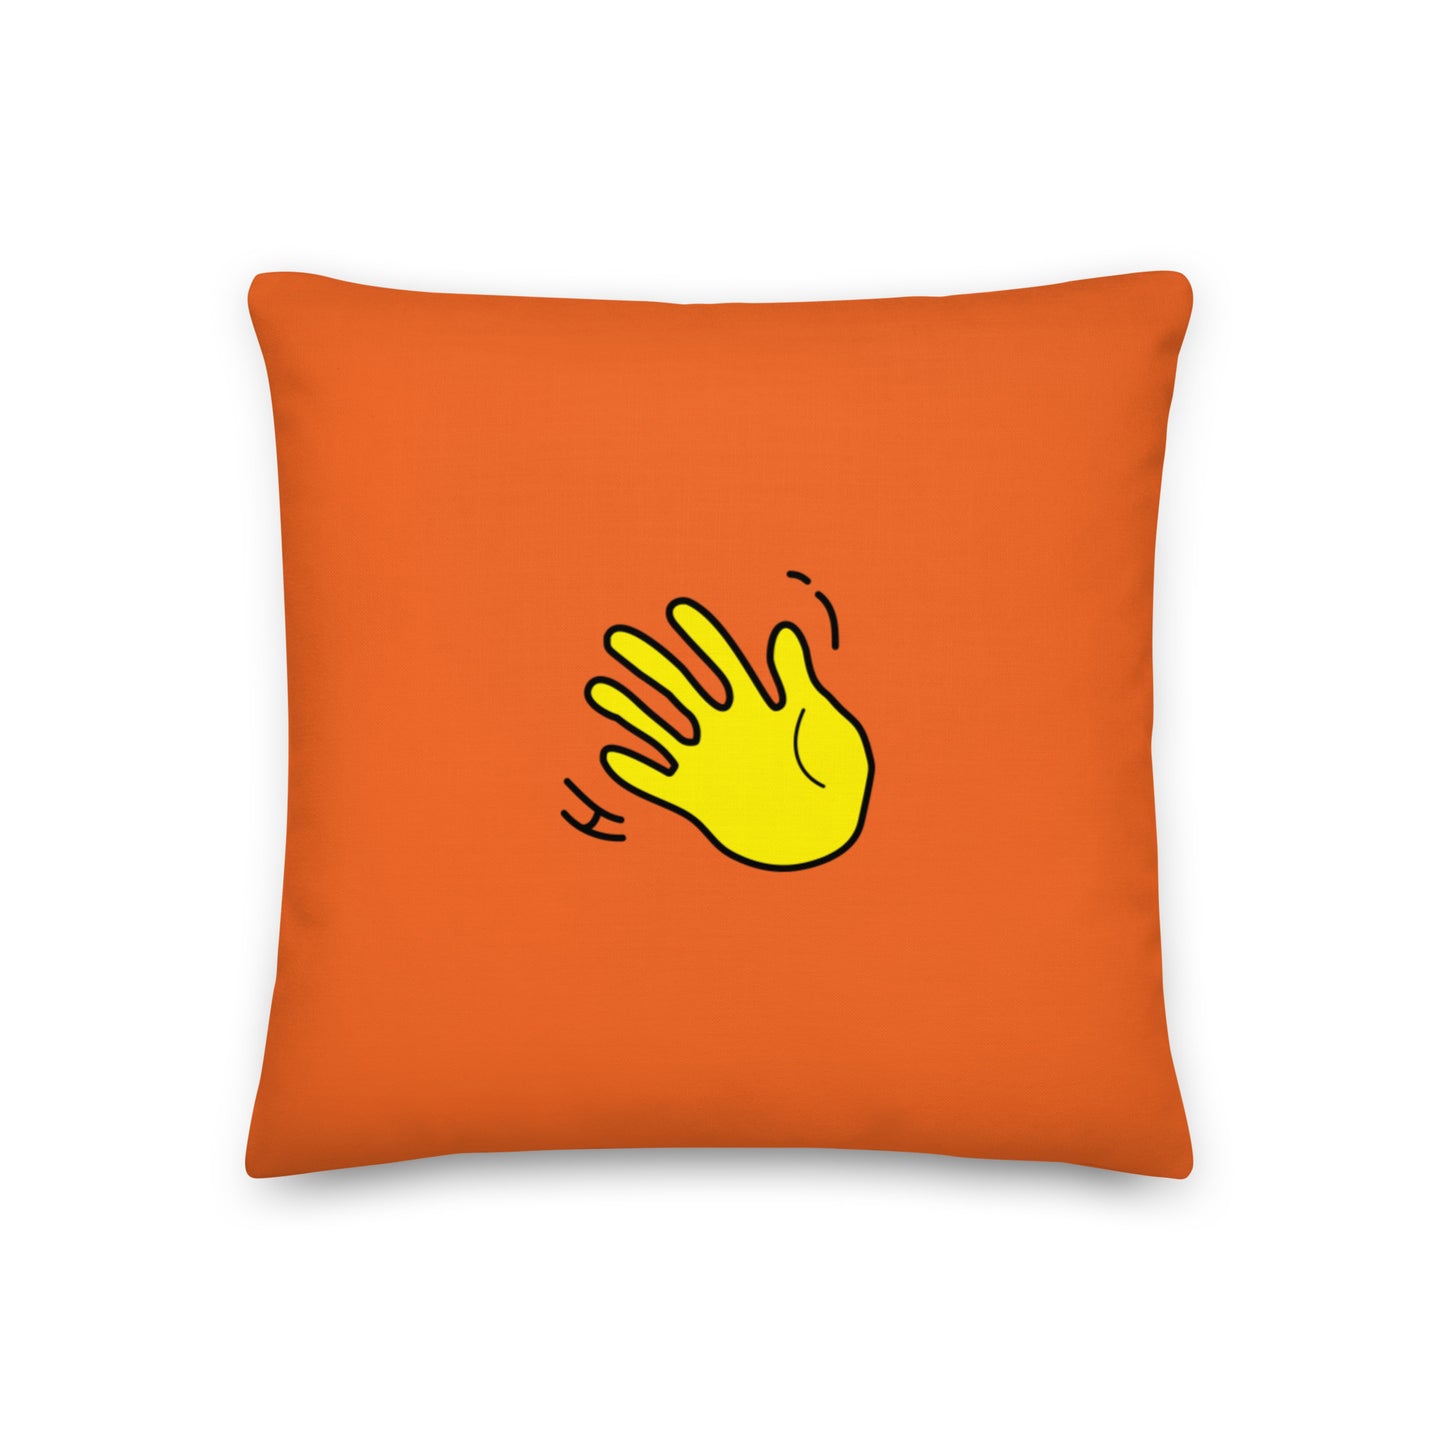 Hi Pillow in orange with Hi emoji by HiJohnny.com